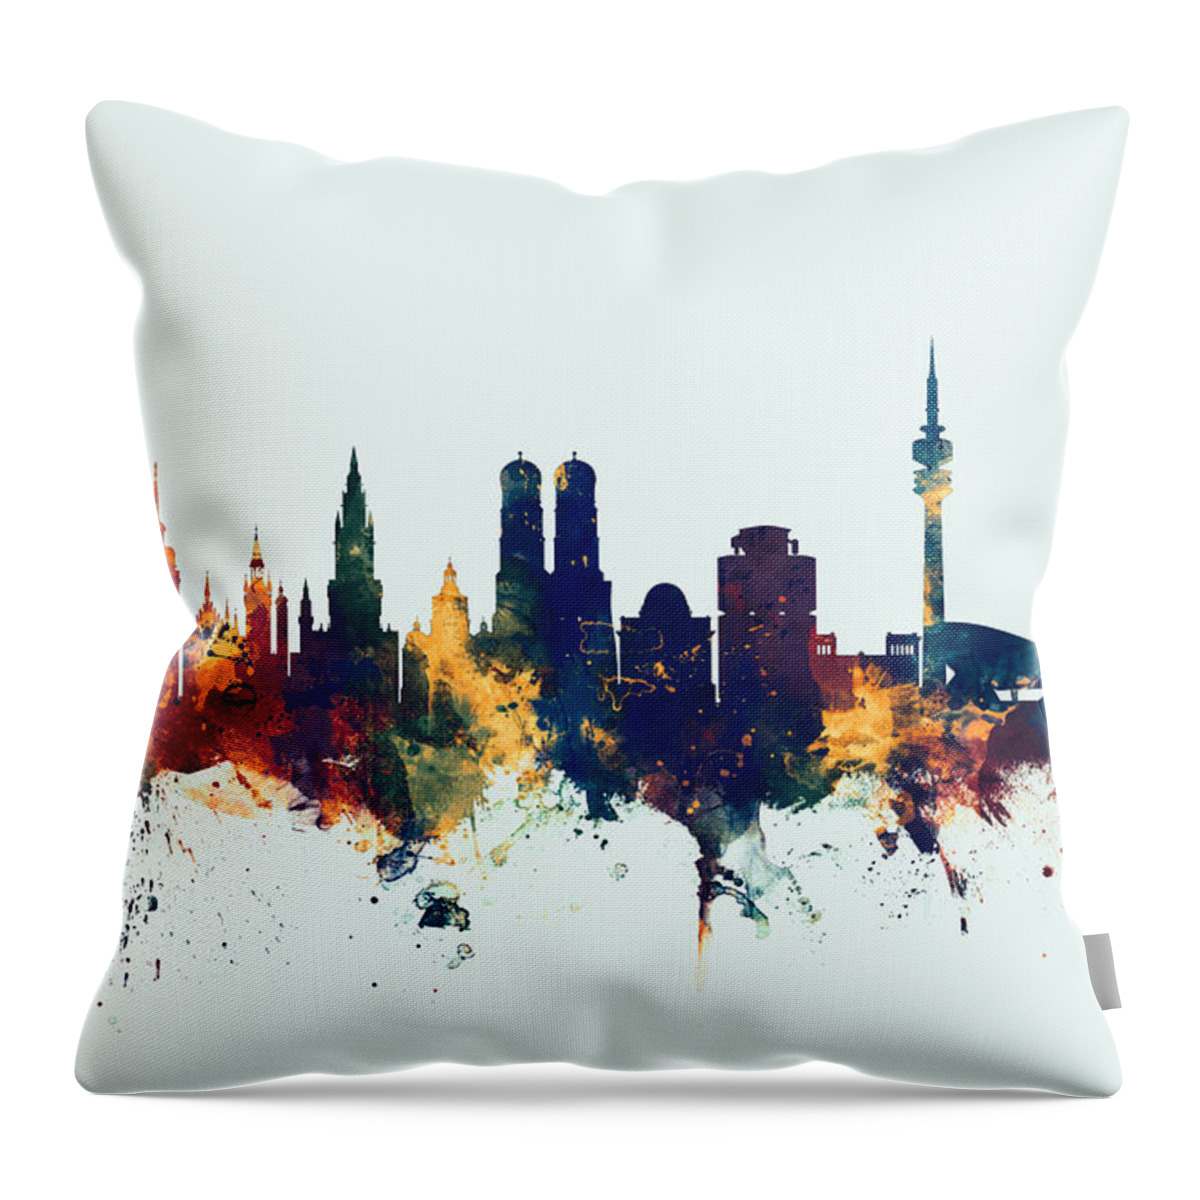 City Skyline Throw Pillow featuring the digital art Munich Germany Skyline #4 by Michael Tompsett